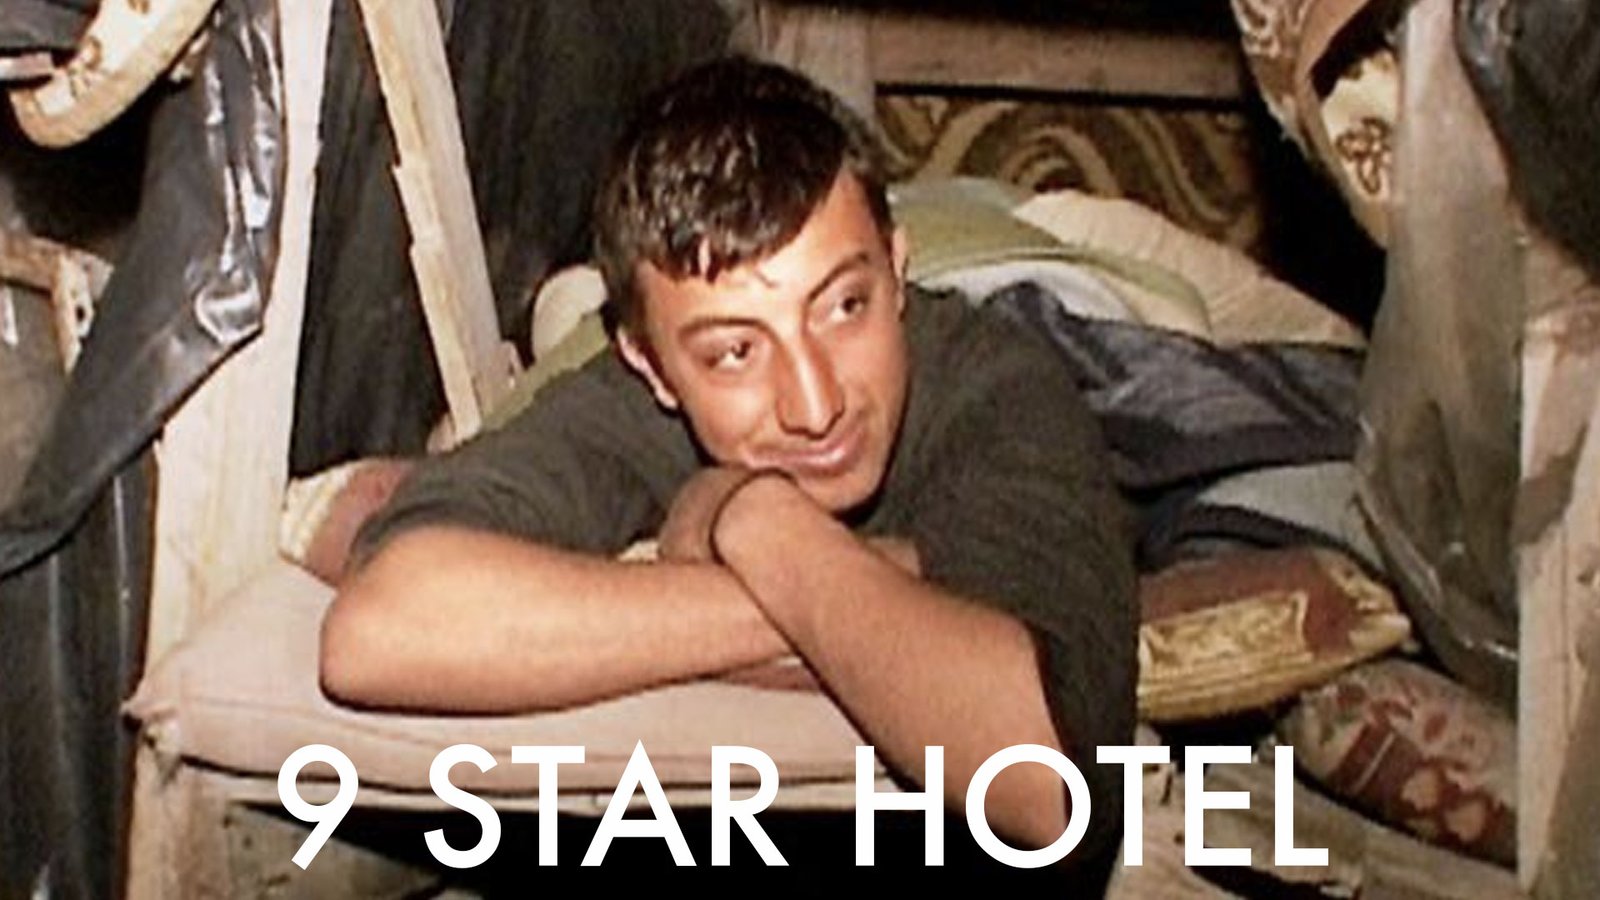 9 Star Hotel